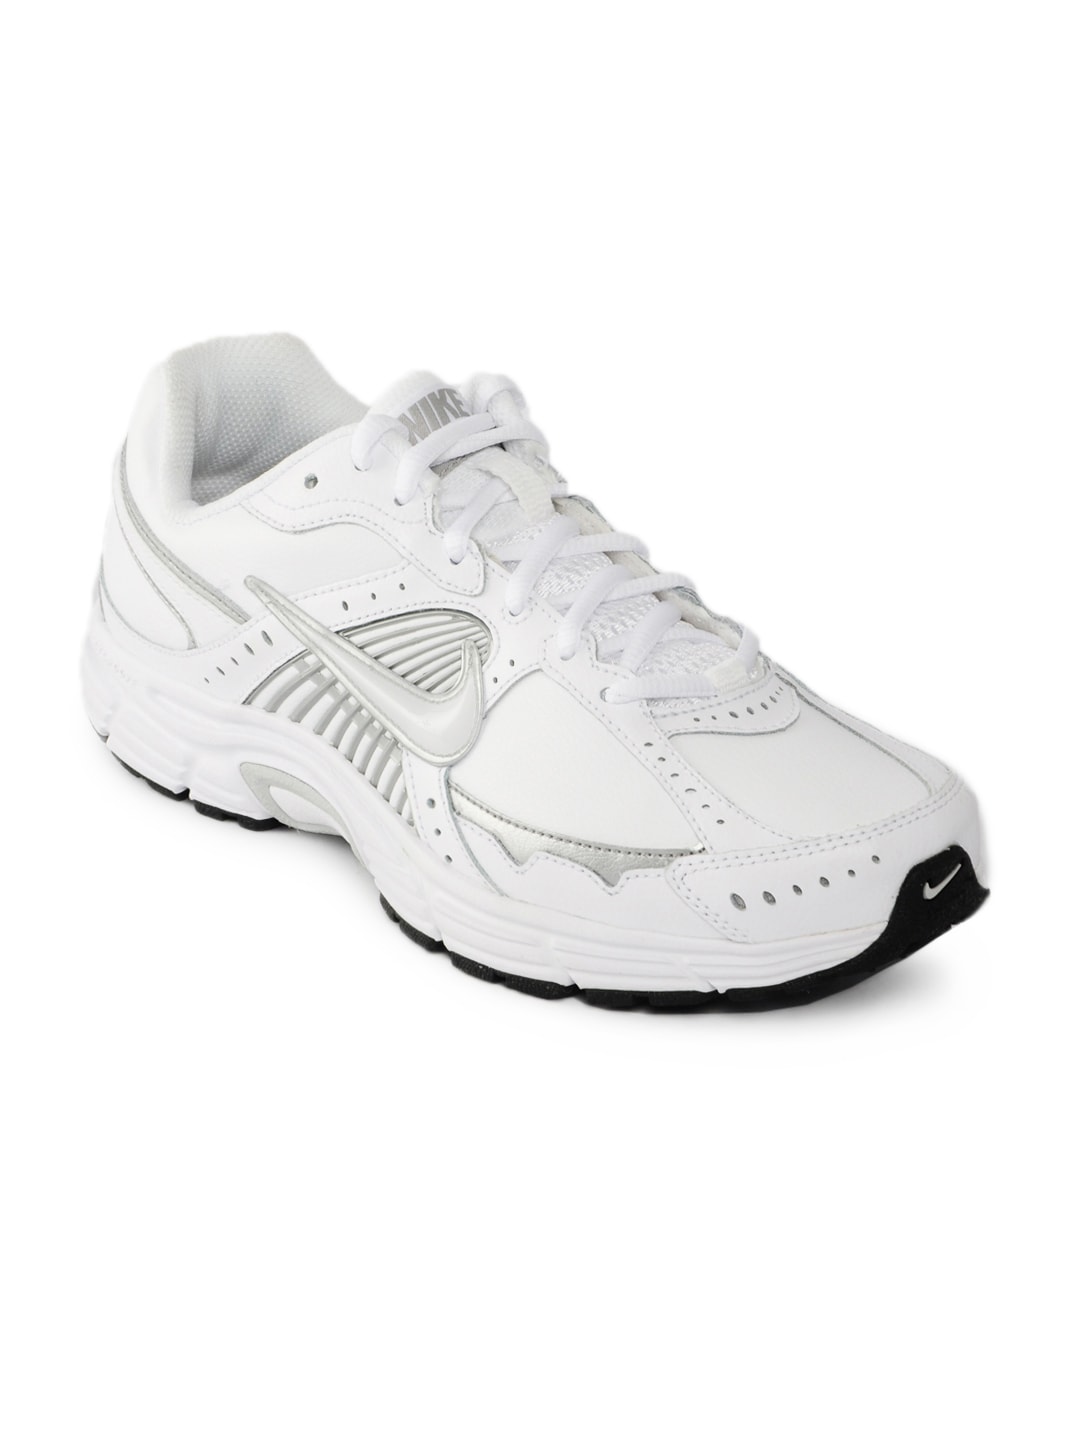 Nike Men Dart VII Leather White Sports Shoes